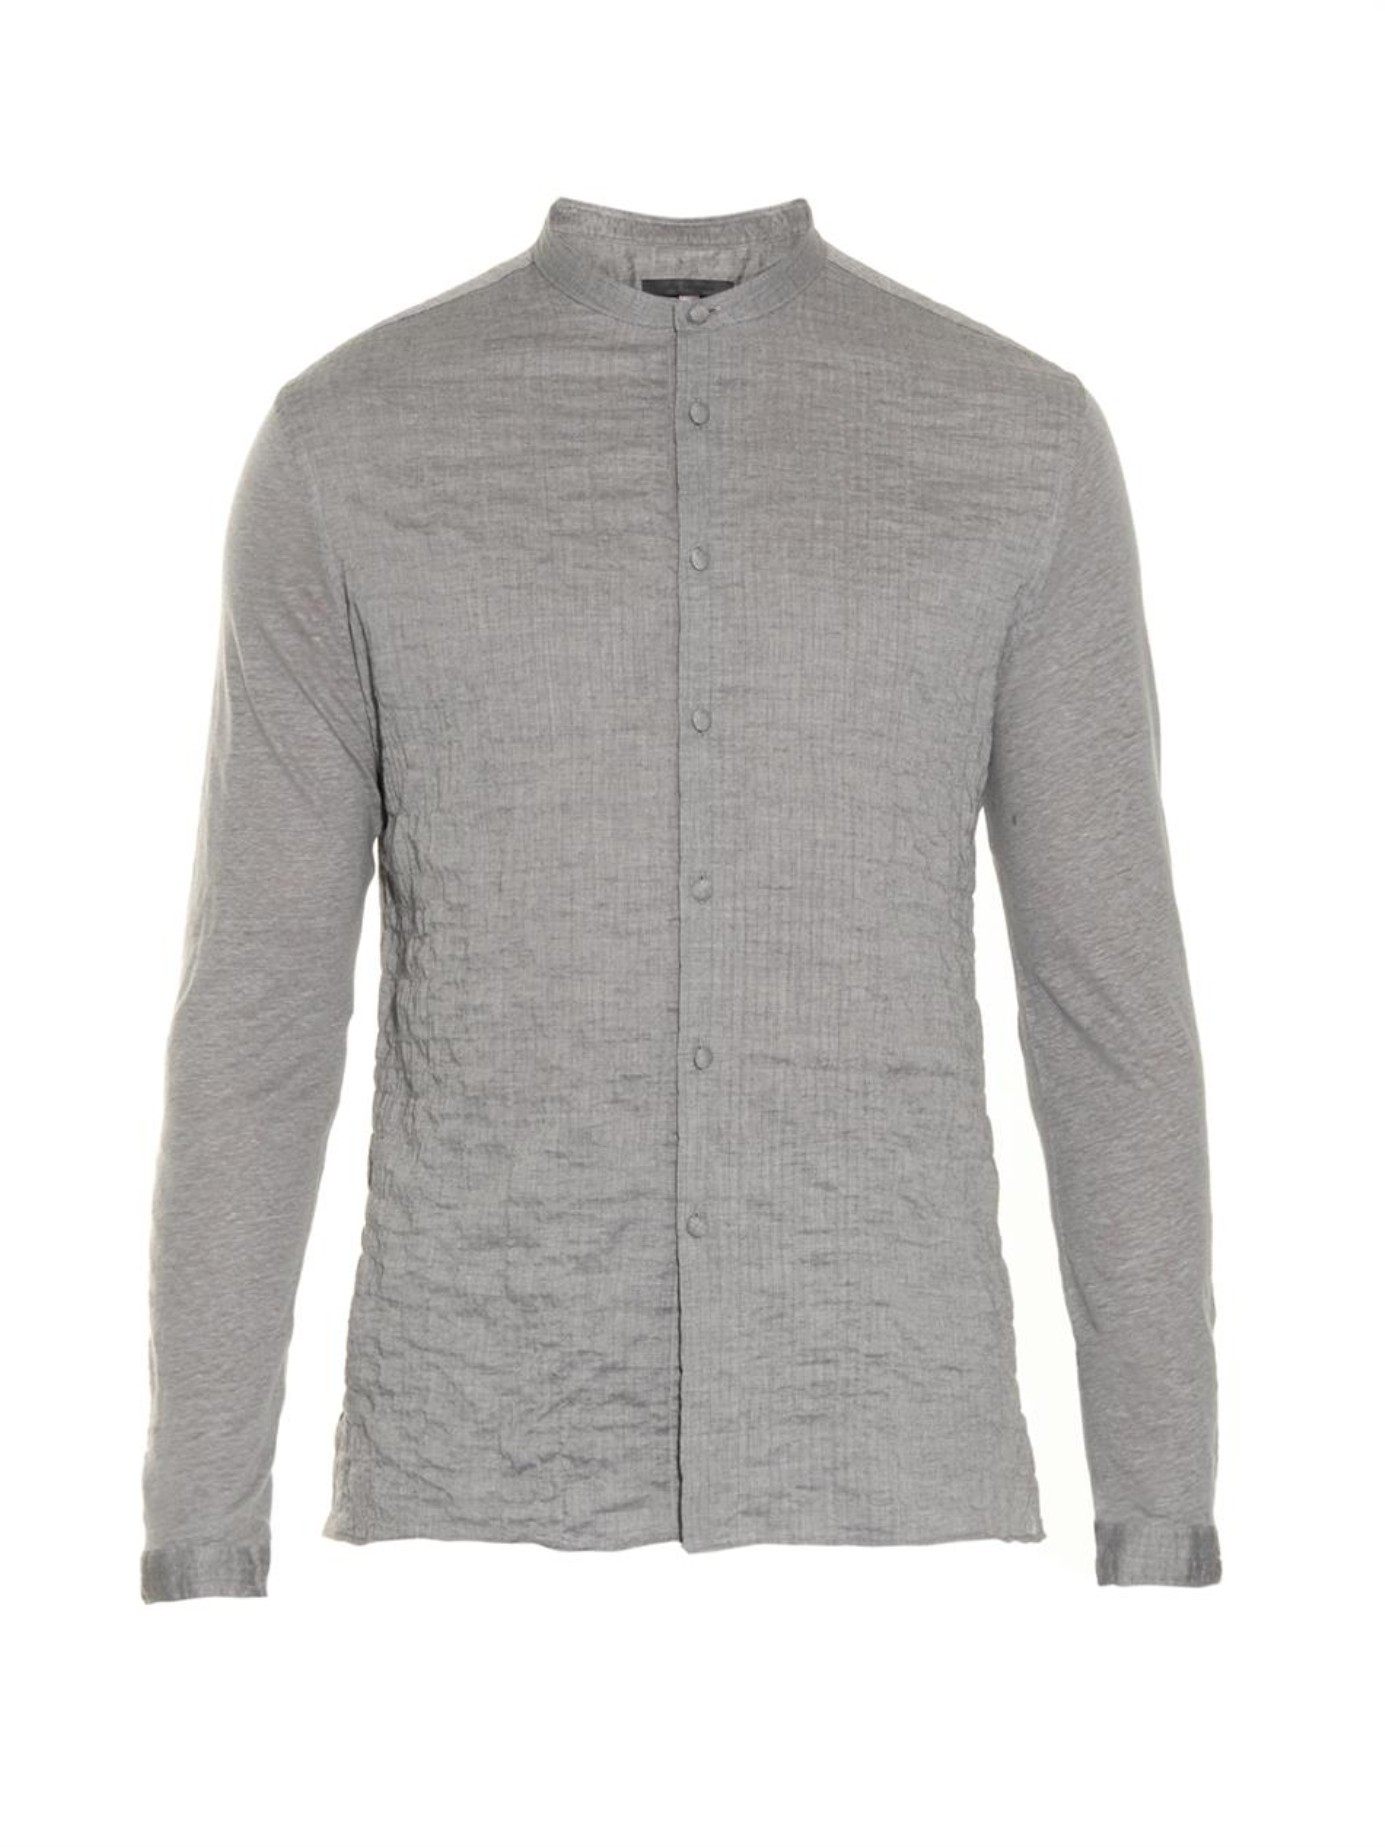 Lyst - John varvatos Collarless Cotton-Blend And Linen Shirt in Gray ...